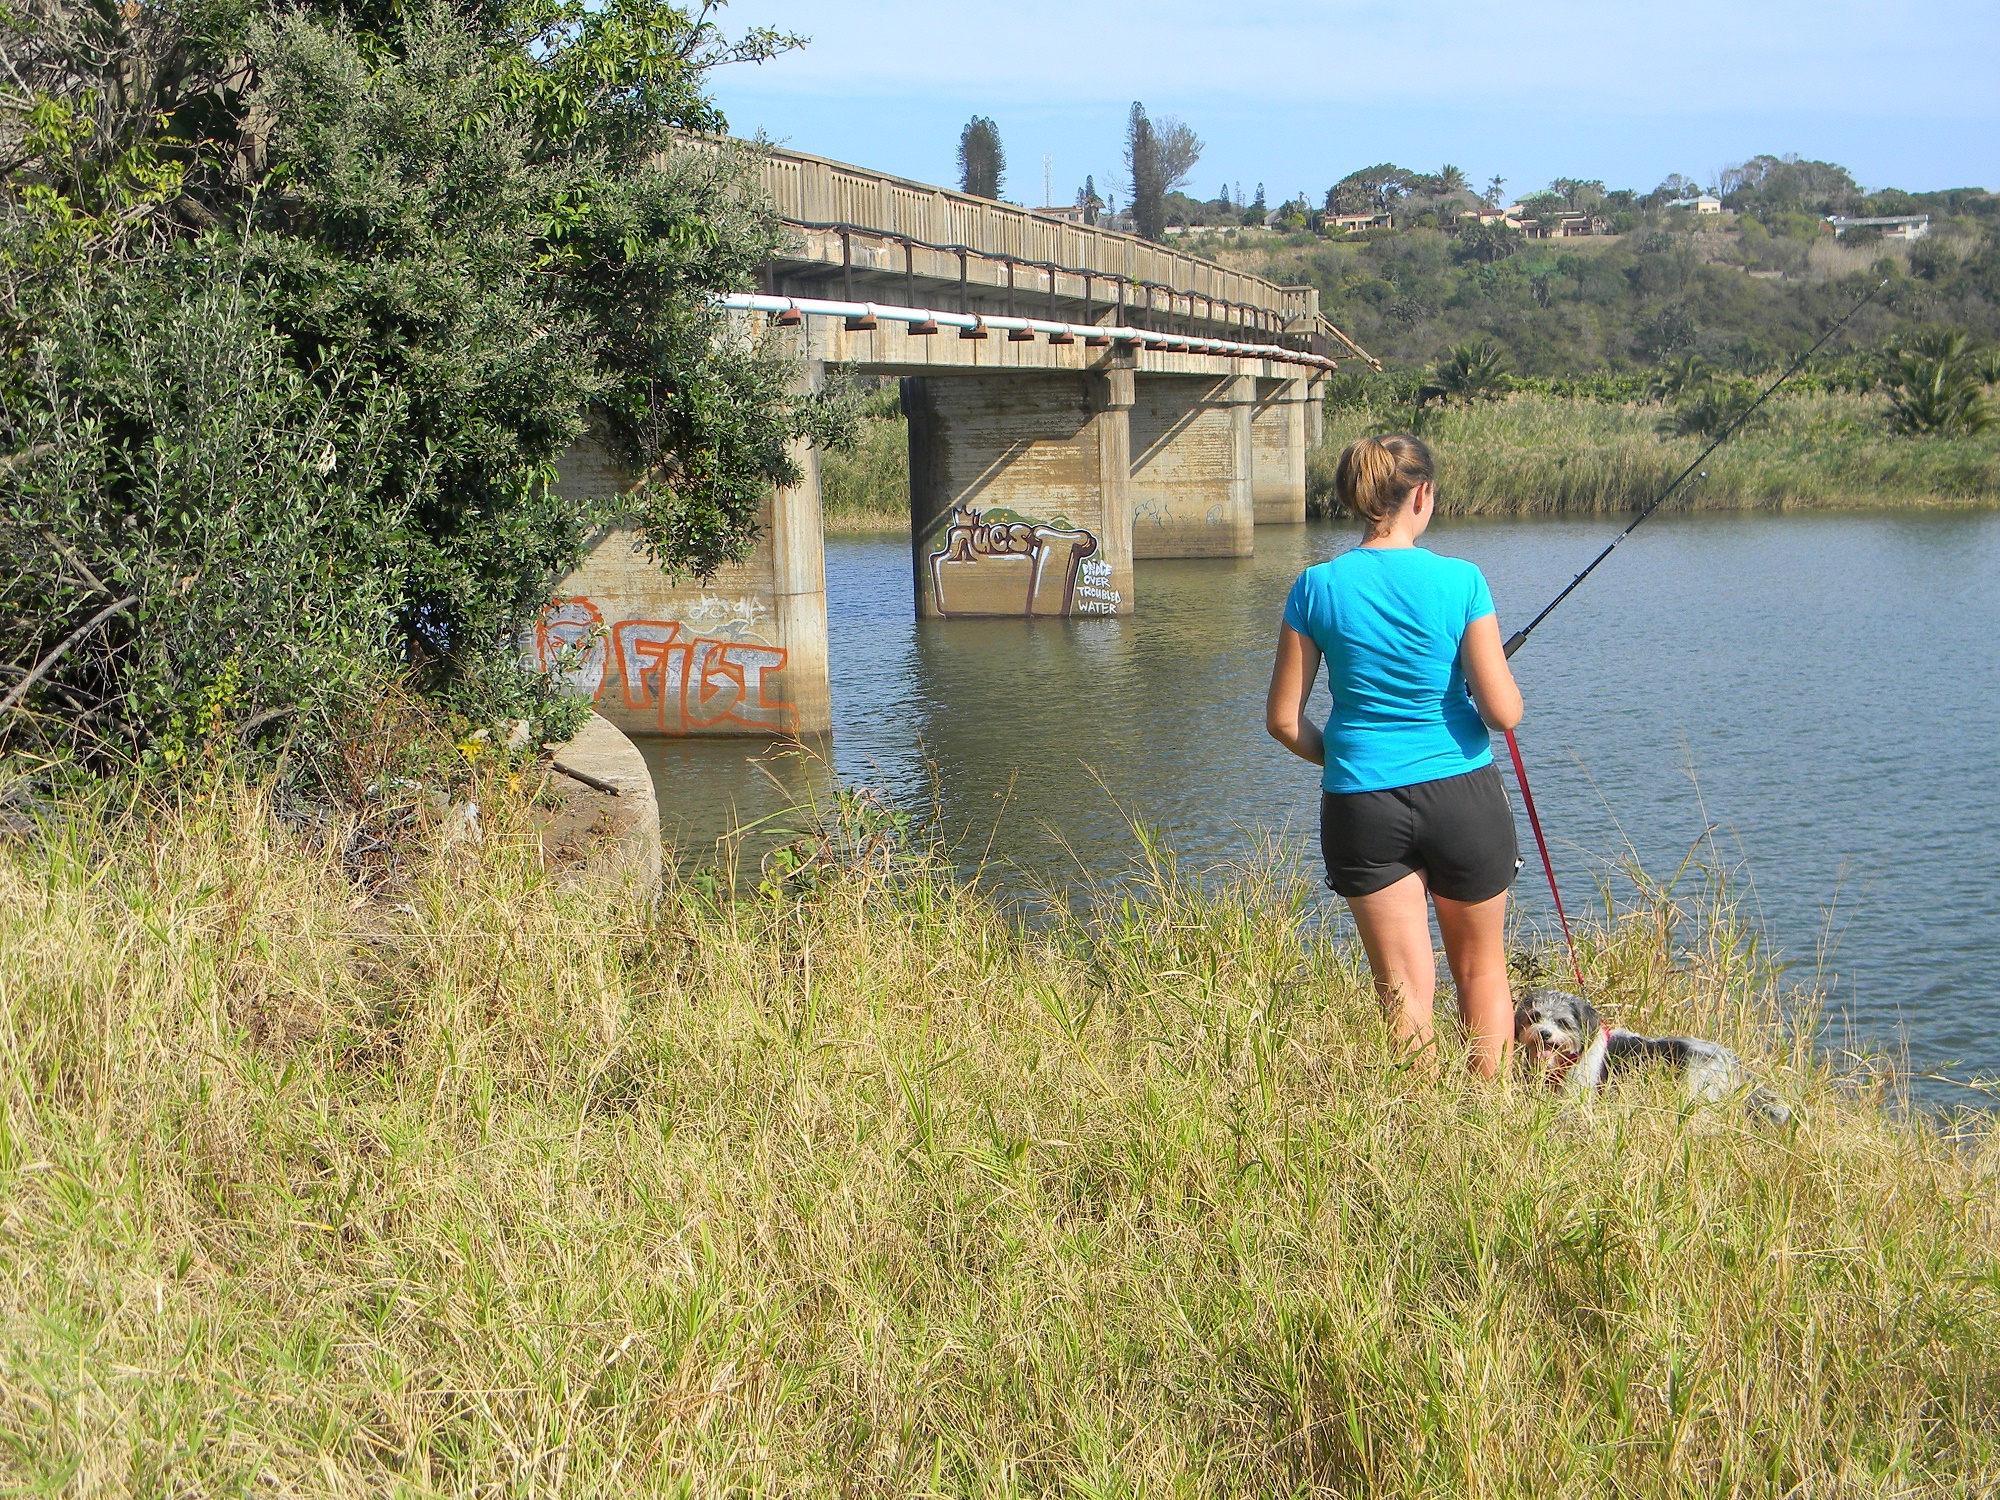 Mtwalume River on the Elysium bank